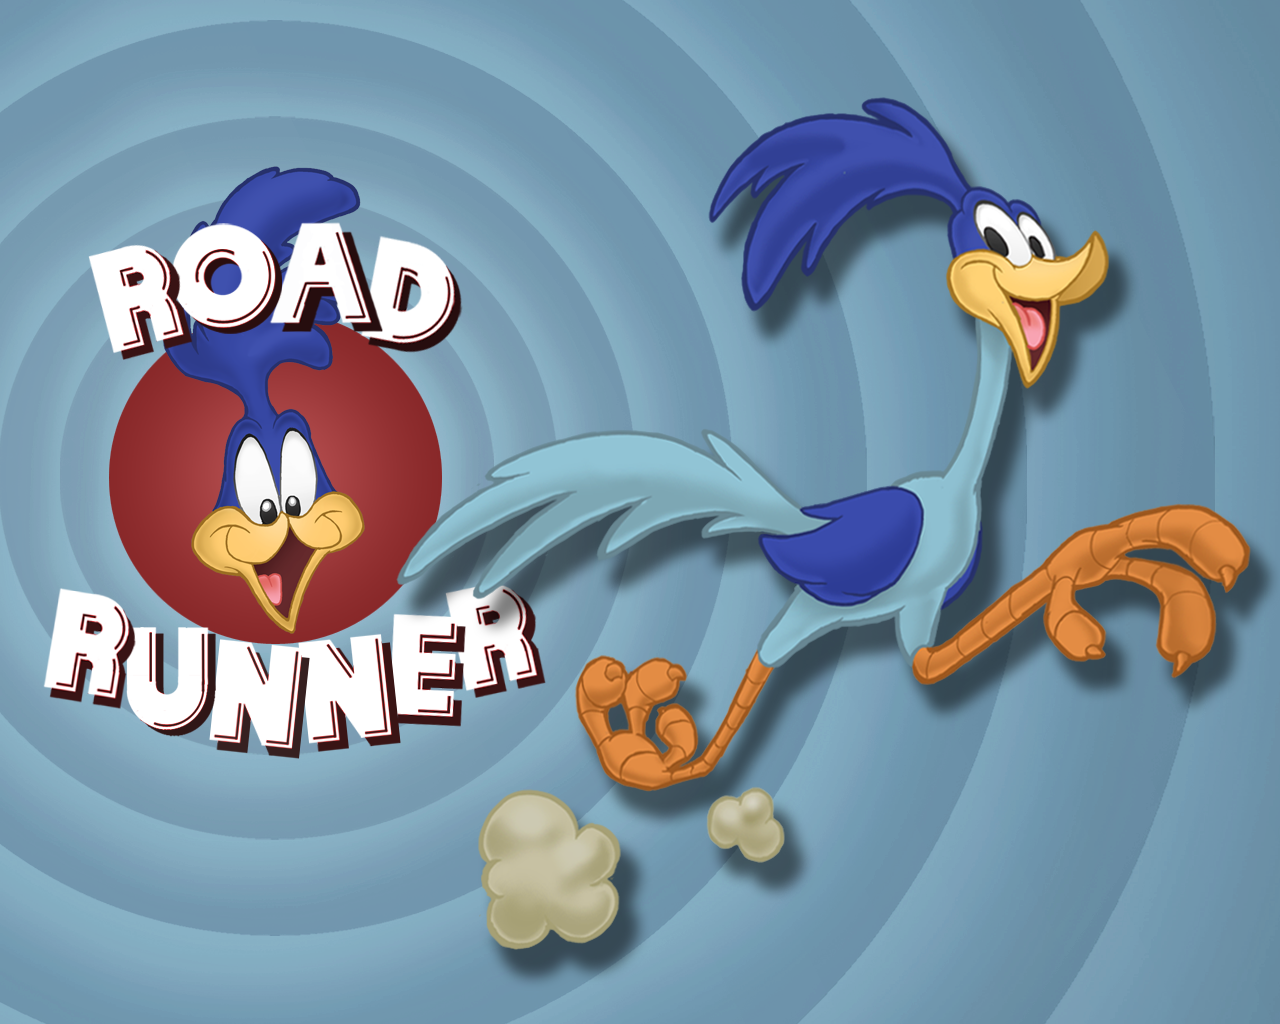 Download Road Runner Cartoon Wallpaper in high resolution for 1280x1024